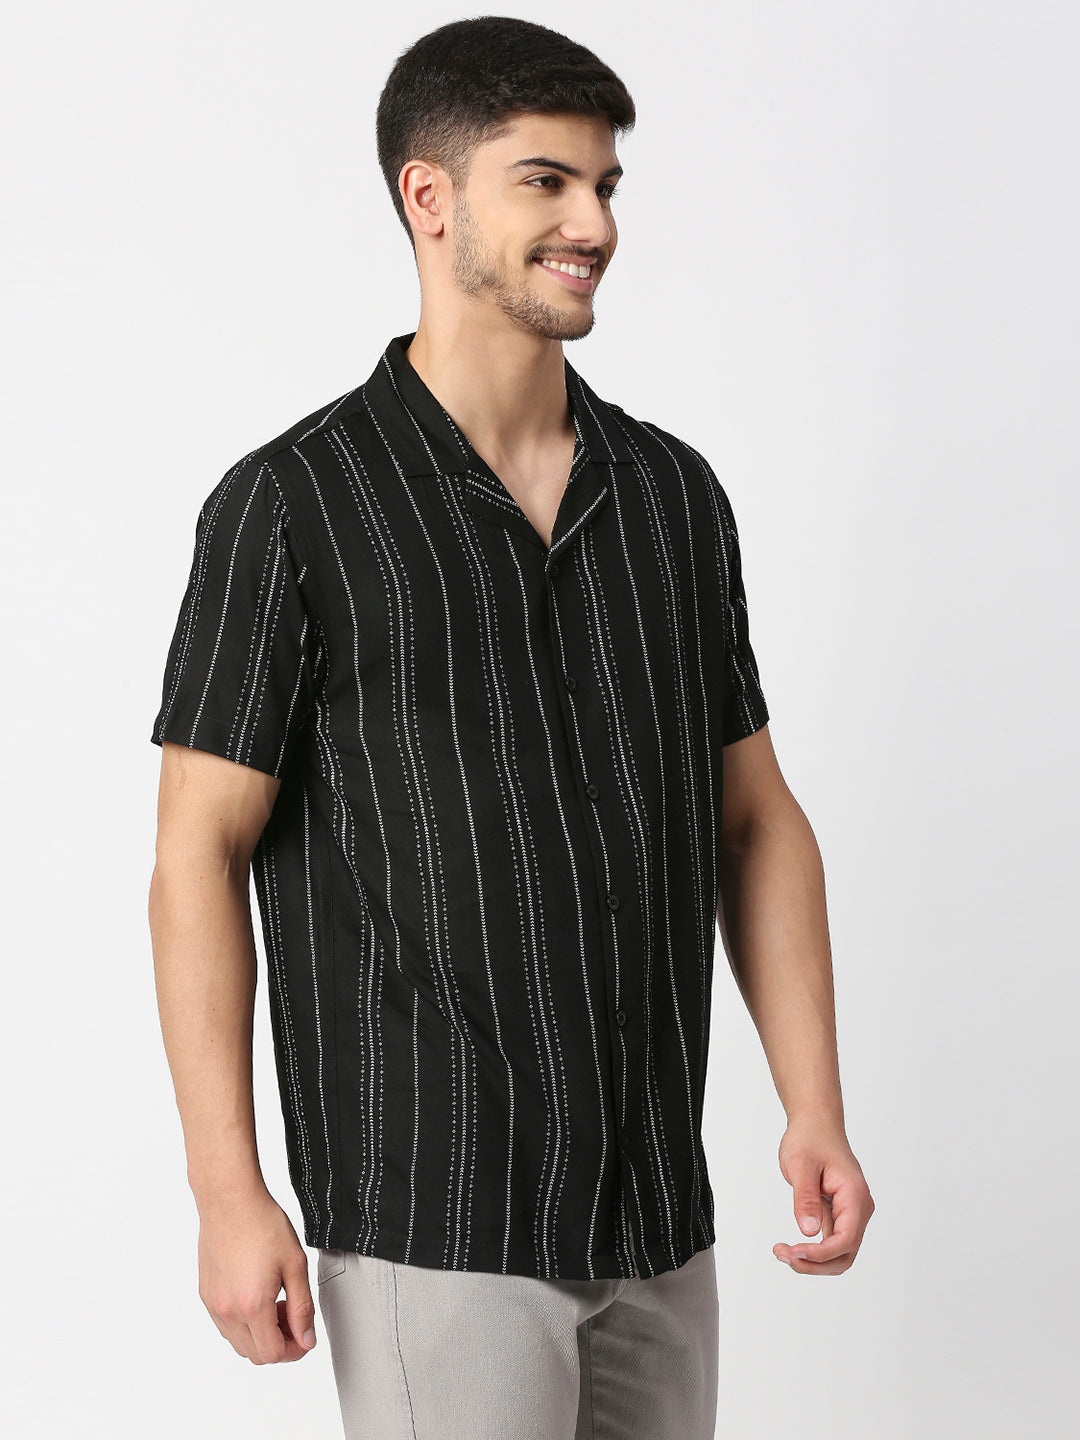 Morocco Black Vertical Stripes Shirt